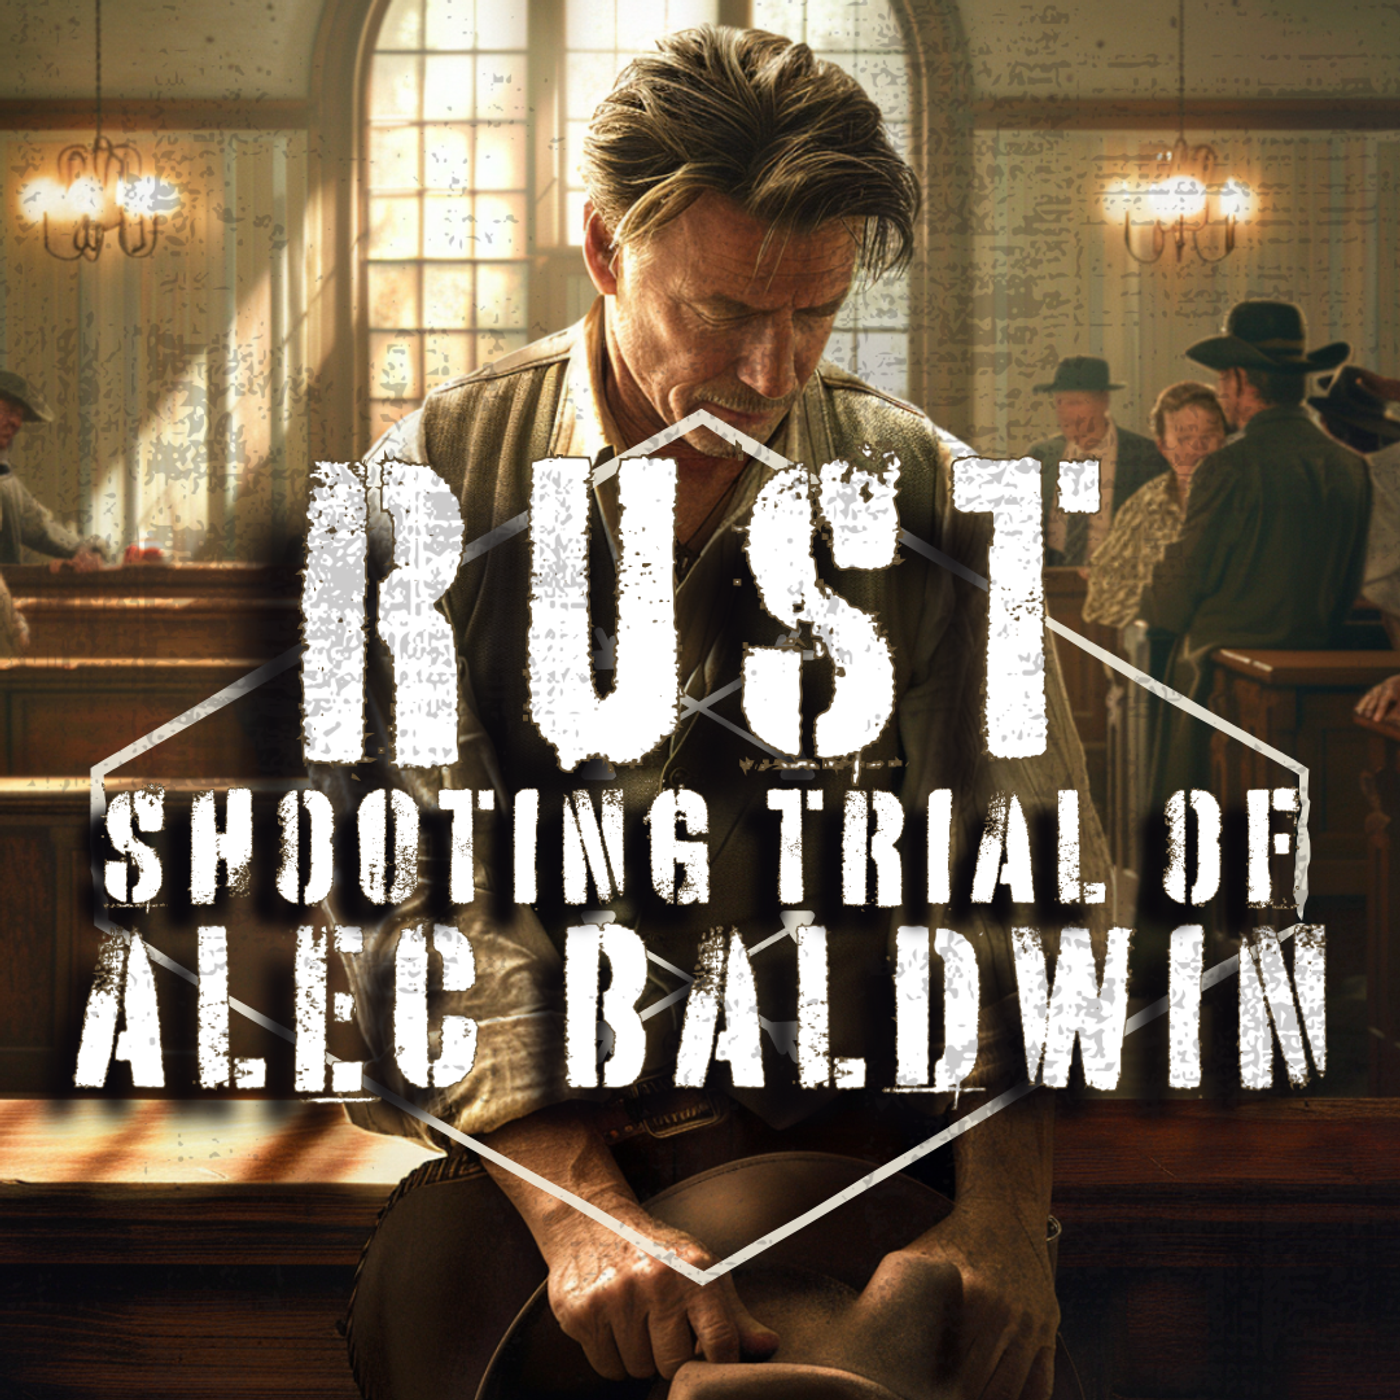 CASE DISMISSED-RUST TRIAL FINAL DAY -NM v. Alec Baldwin Manslaughter Trial- Day 3 Part 2